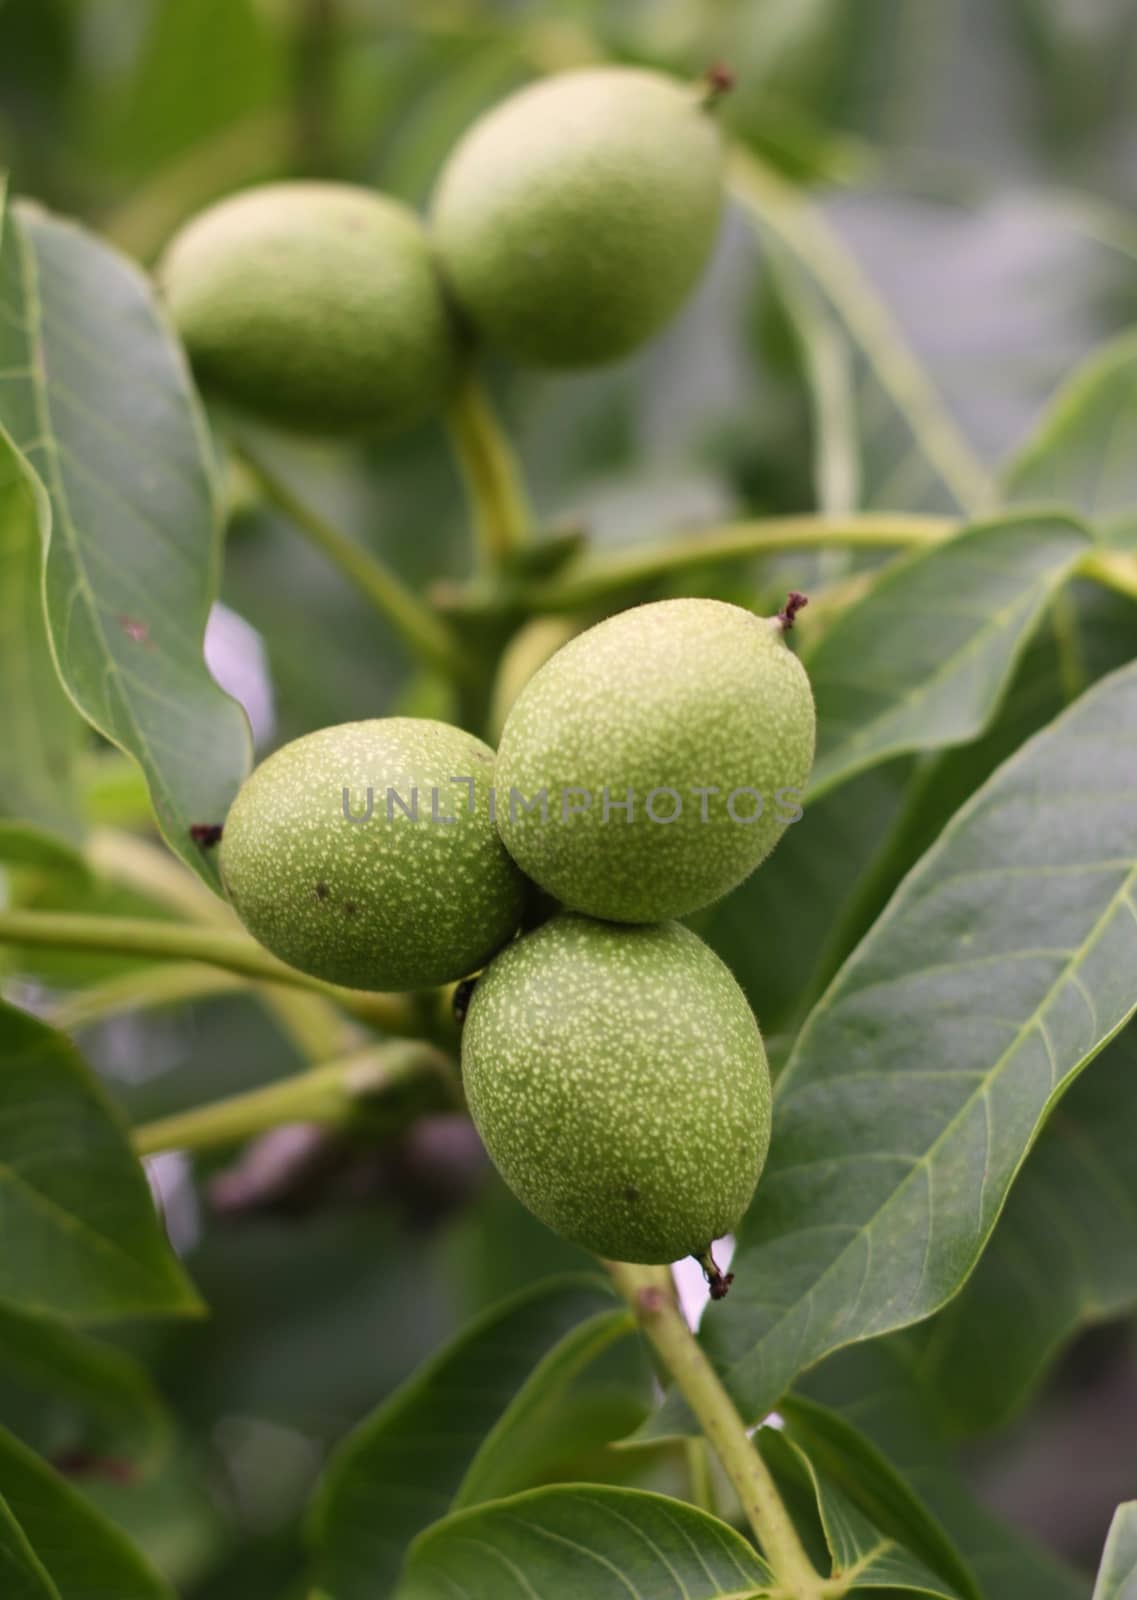 immature green walnuts on the tree by jnerad